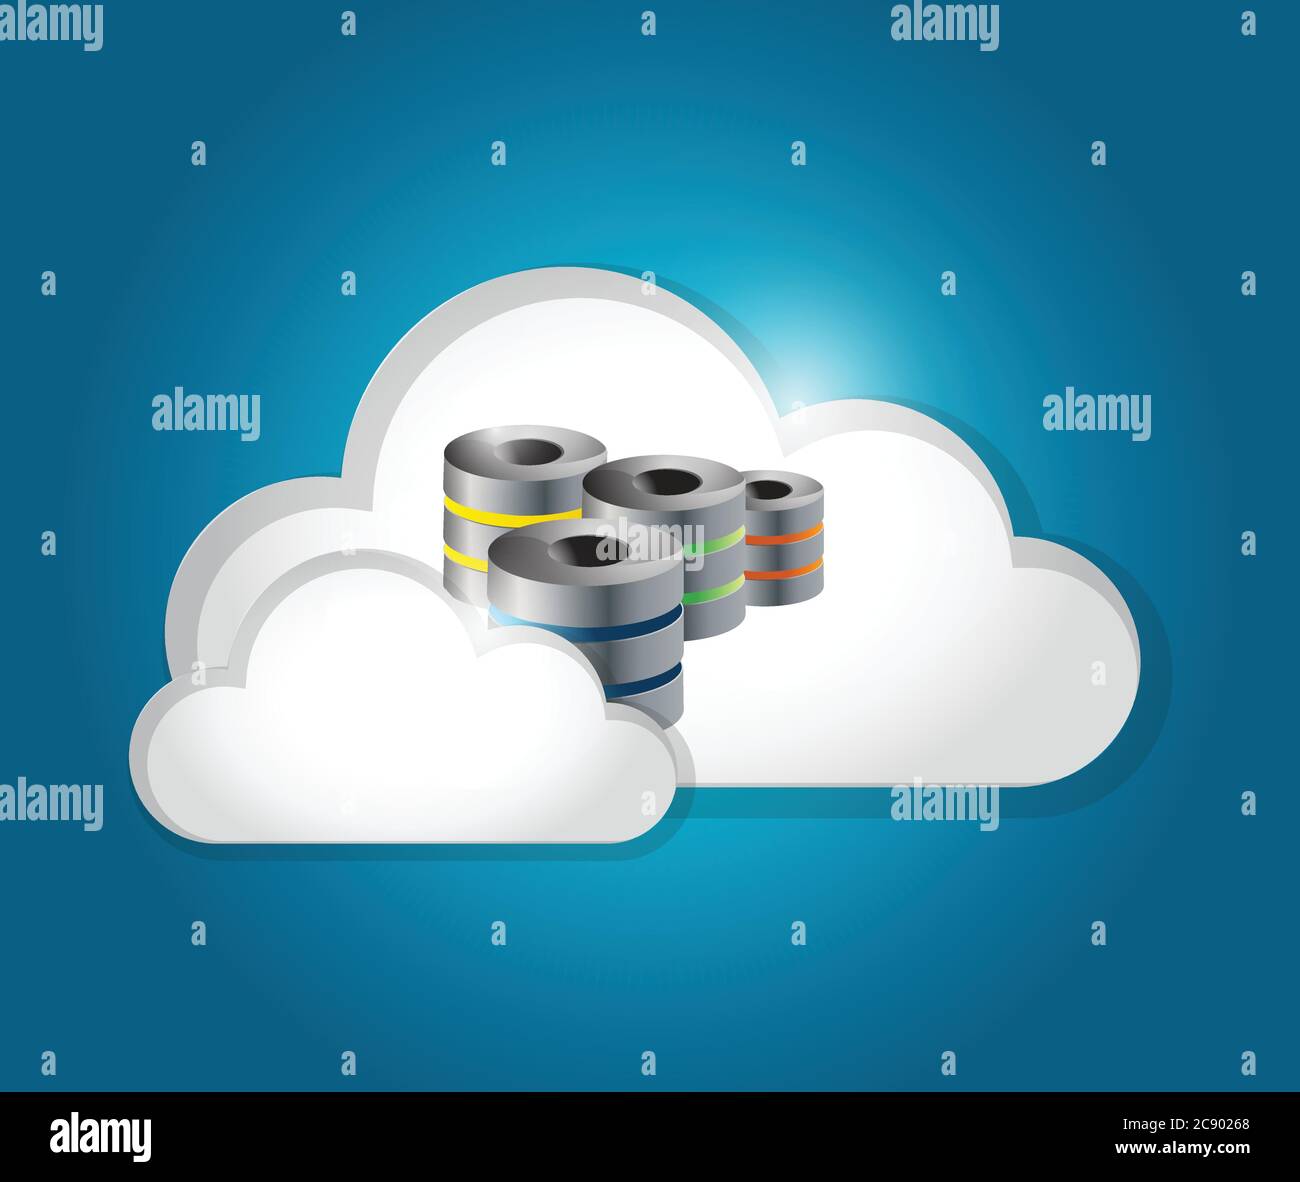 Server cloud connection illustration design over a blue background Stock Vector